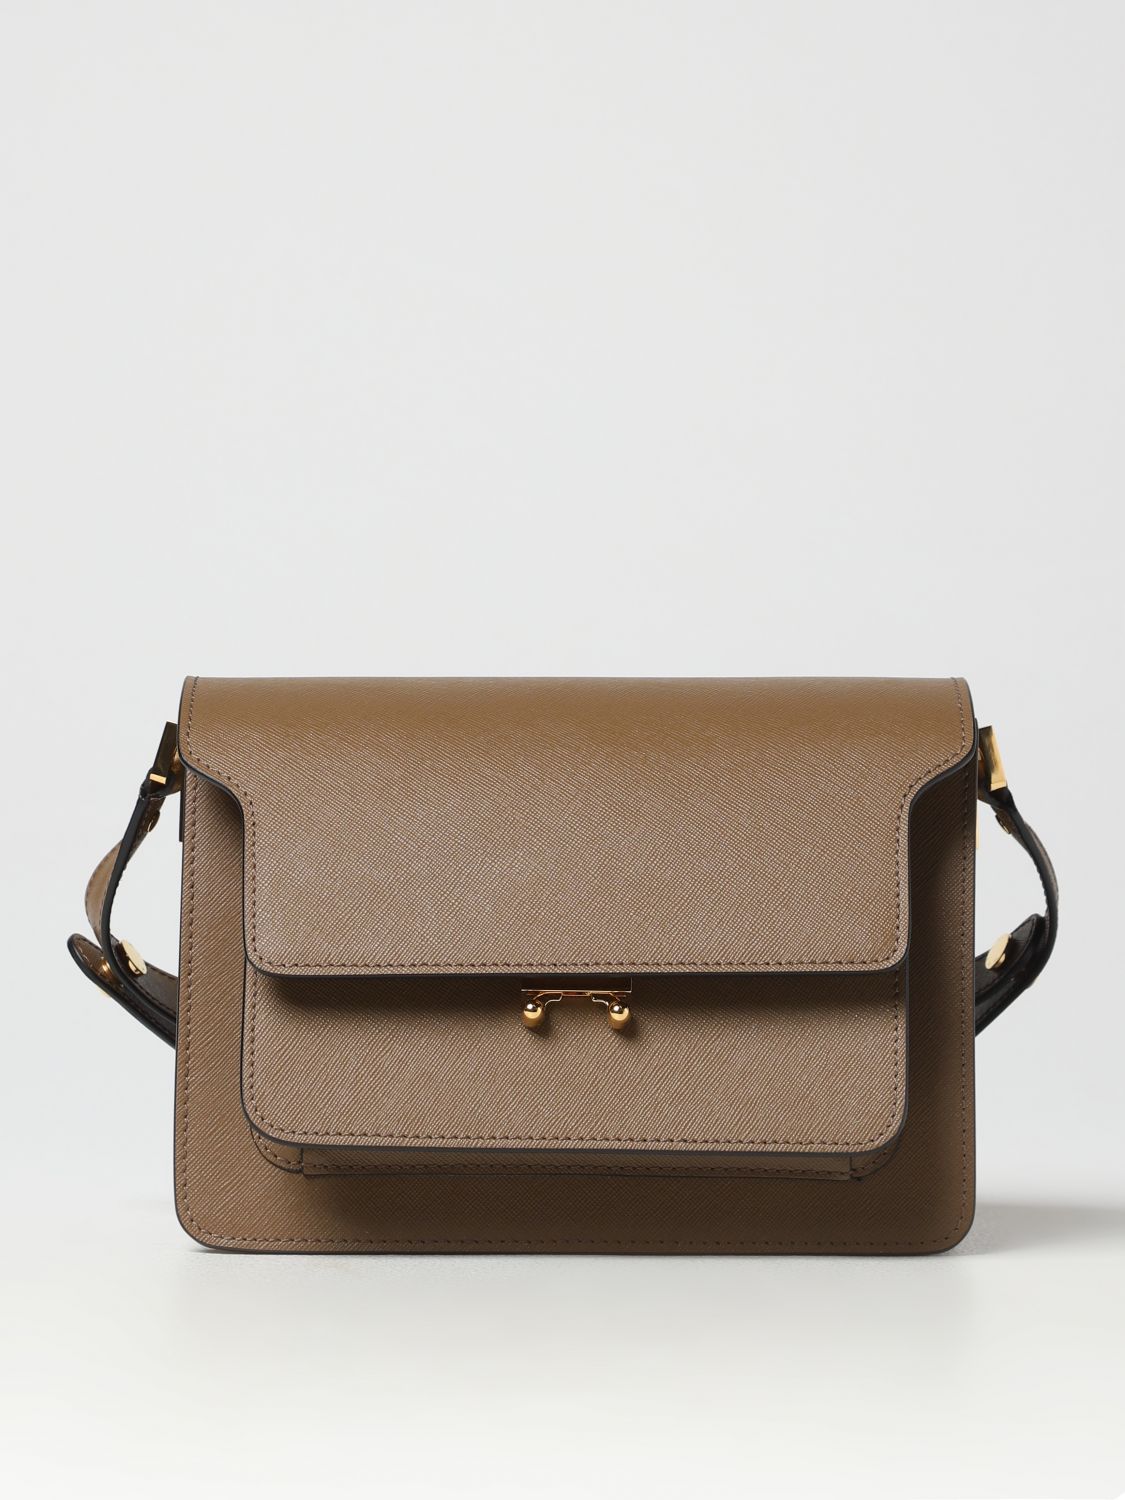 Marni Trunk Bag In Saffiano Leather In Brown